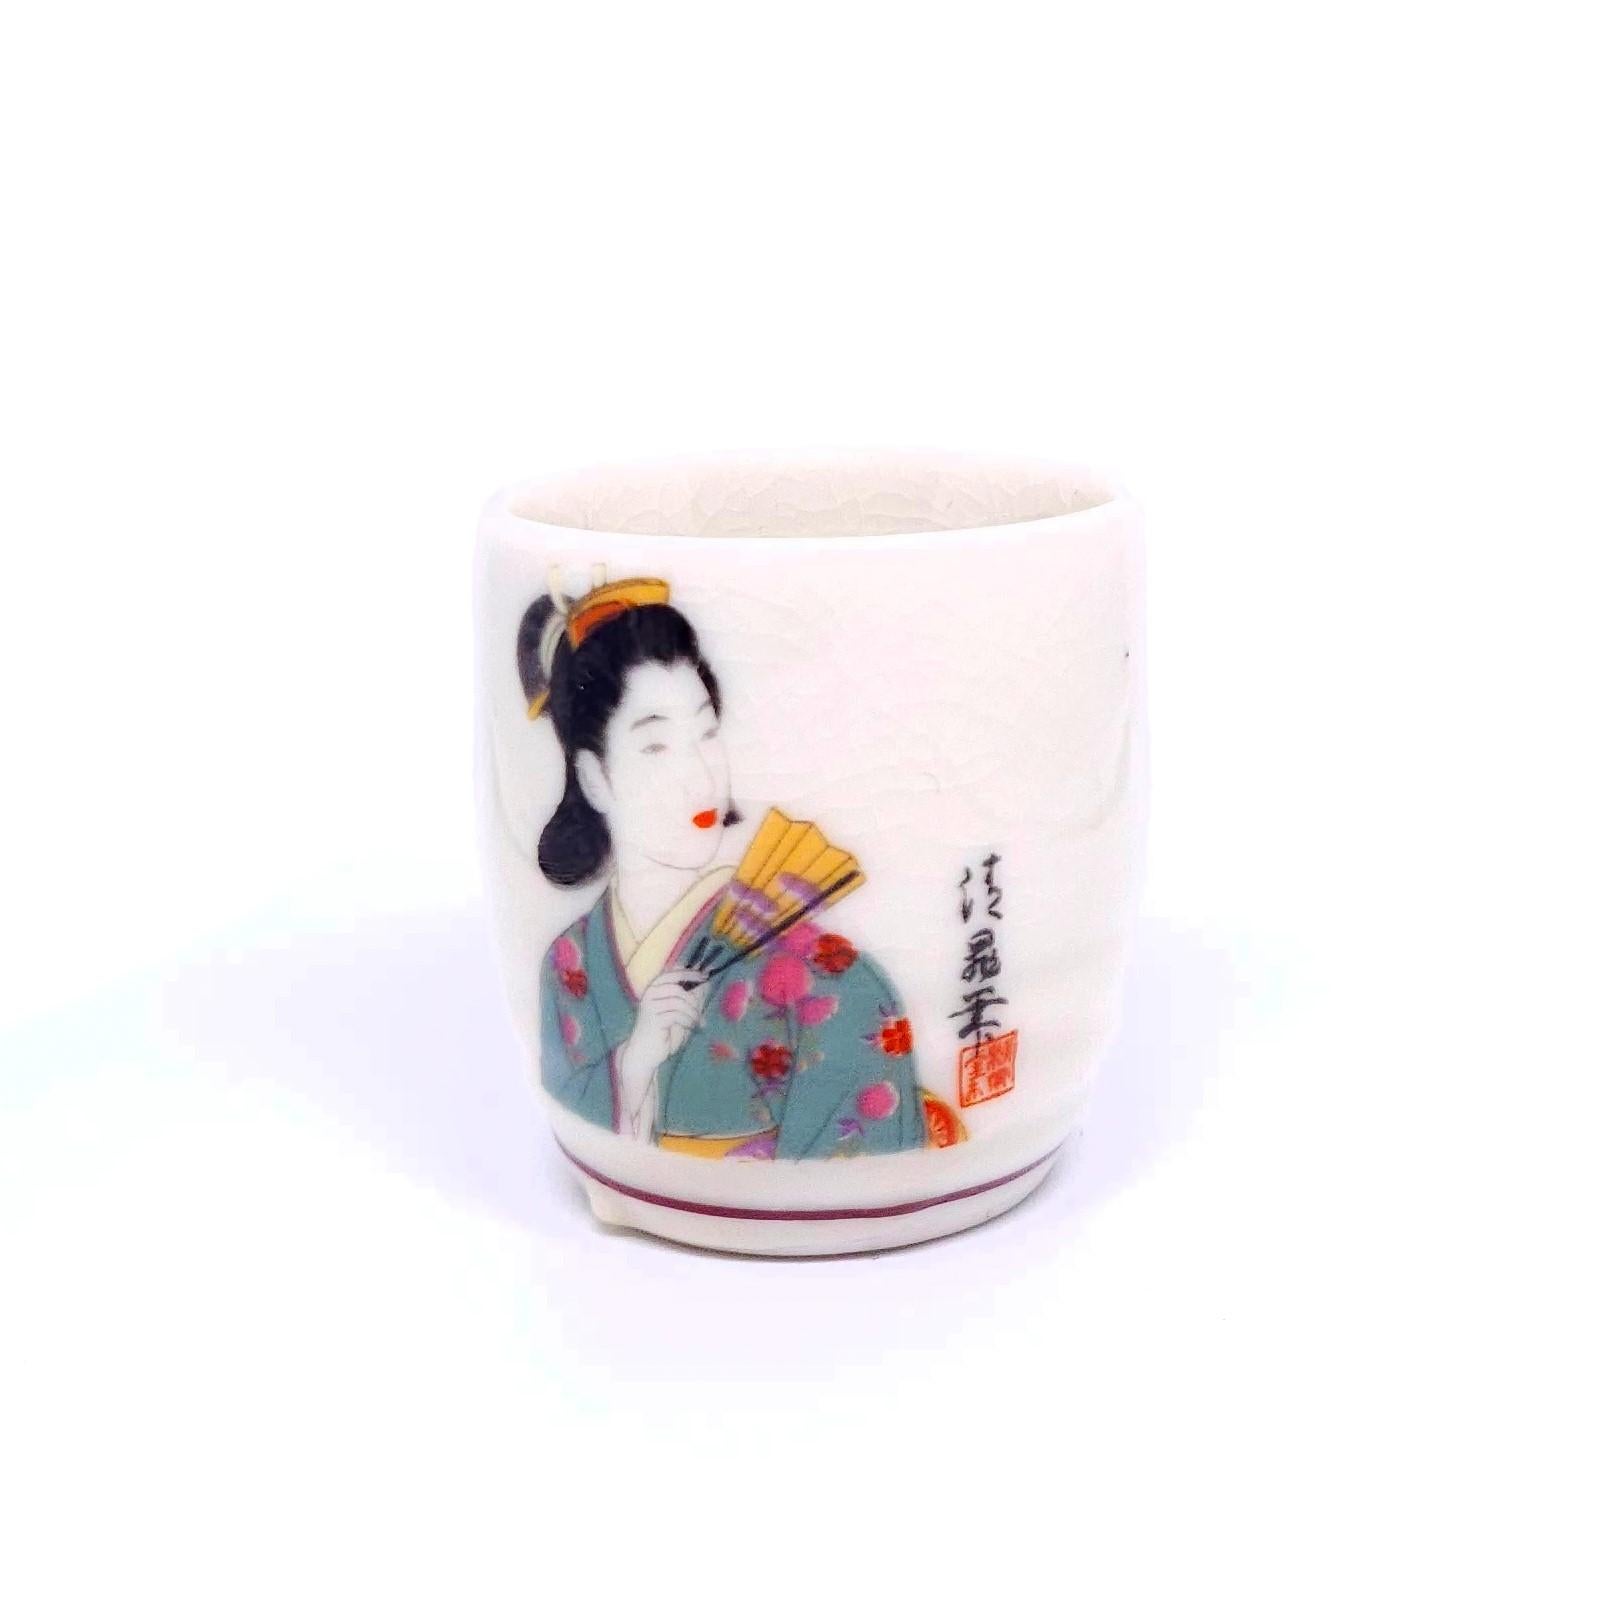 Vintage Japanese Hand Painted Ceramics Sake Set Geisha New in Box Made in Japan 2